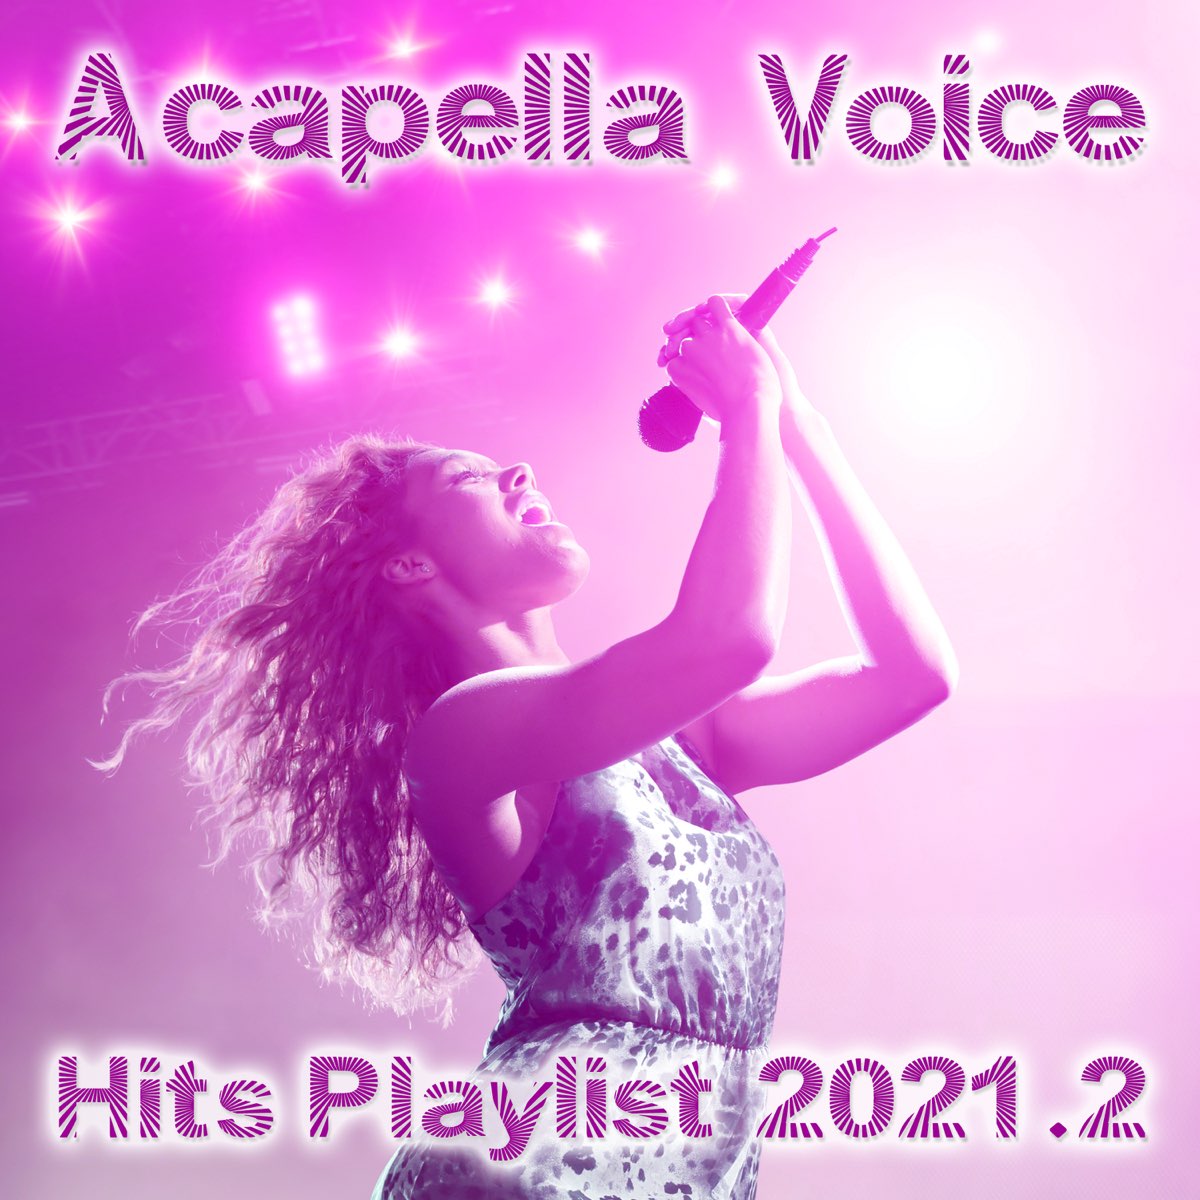 Blue Acapella. Hits playlist